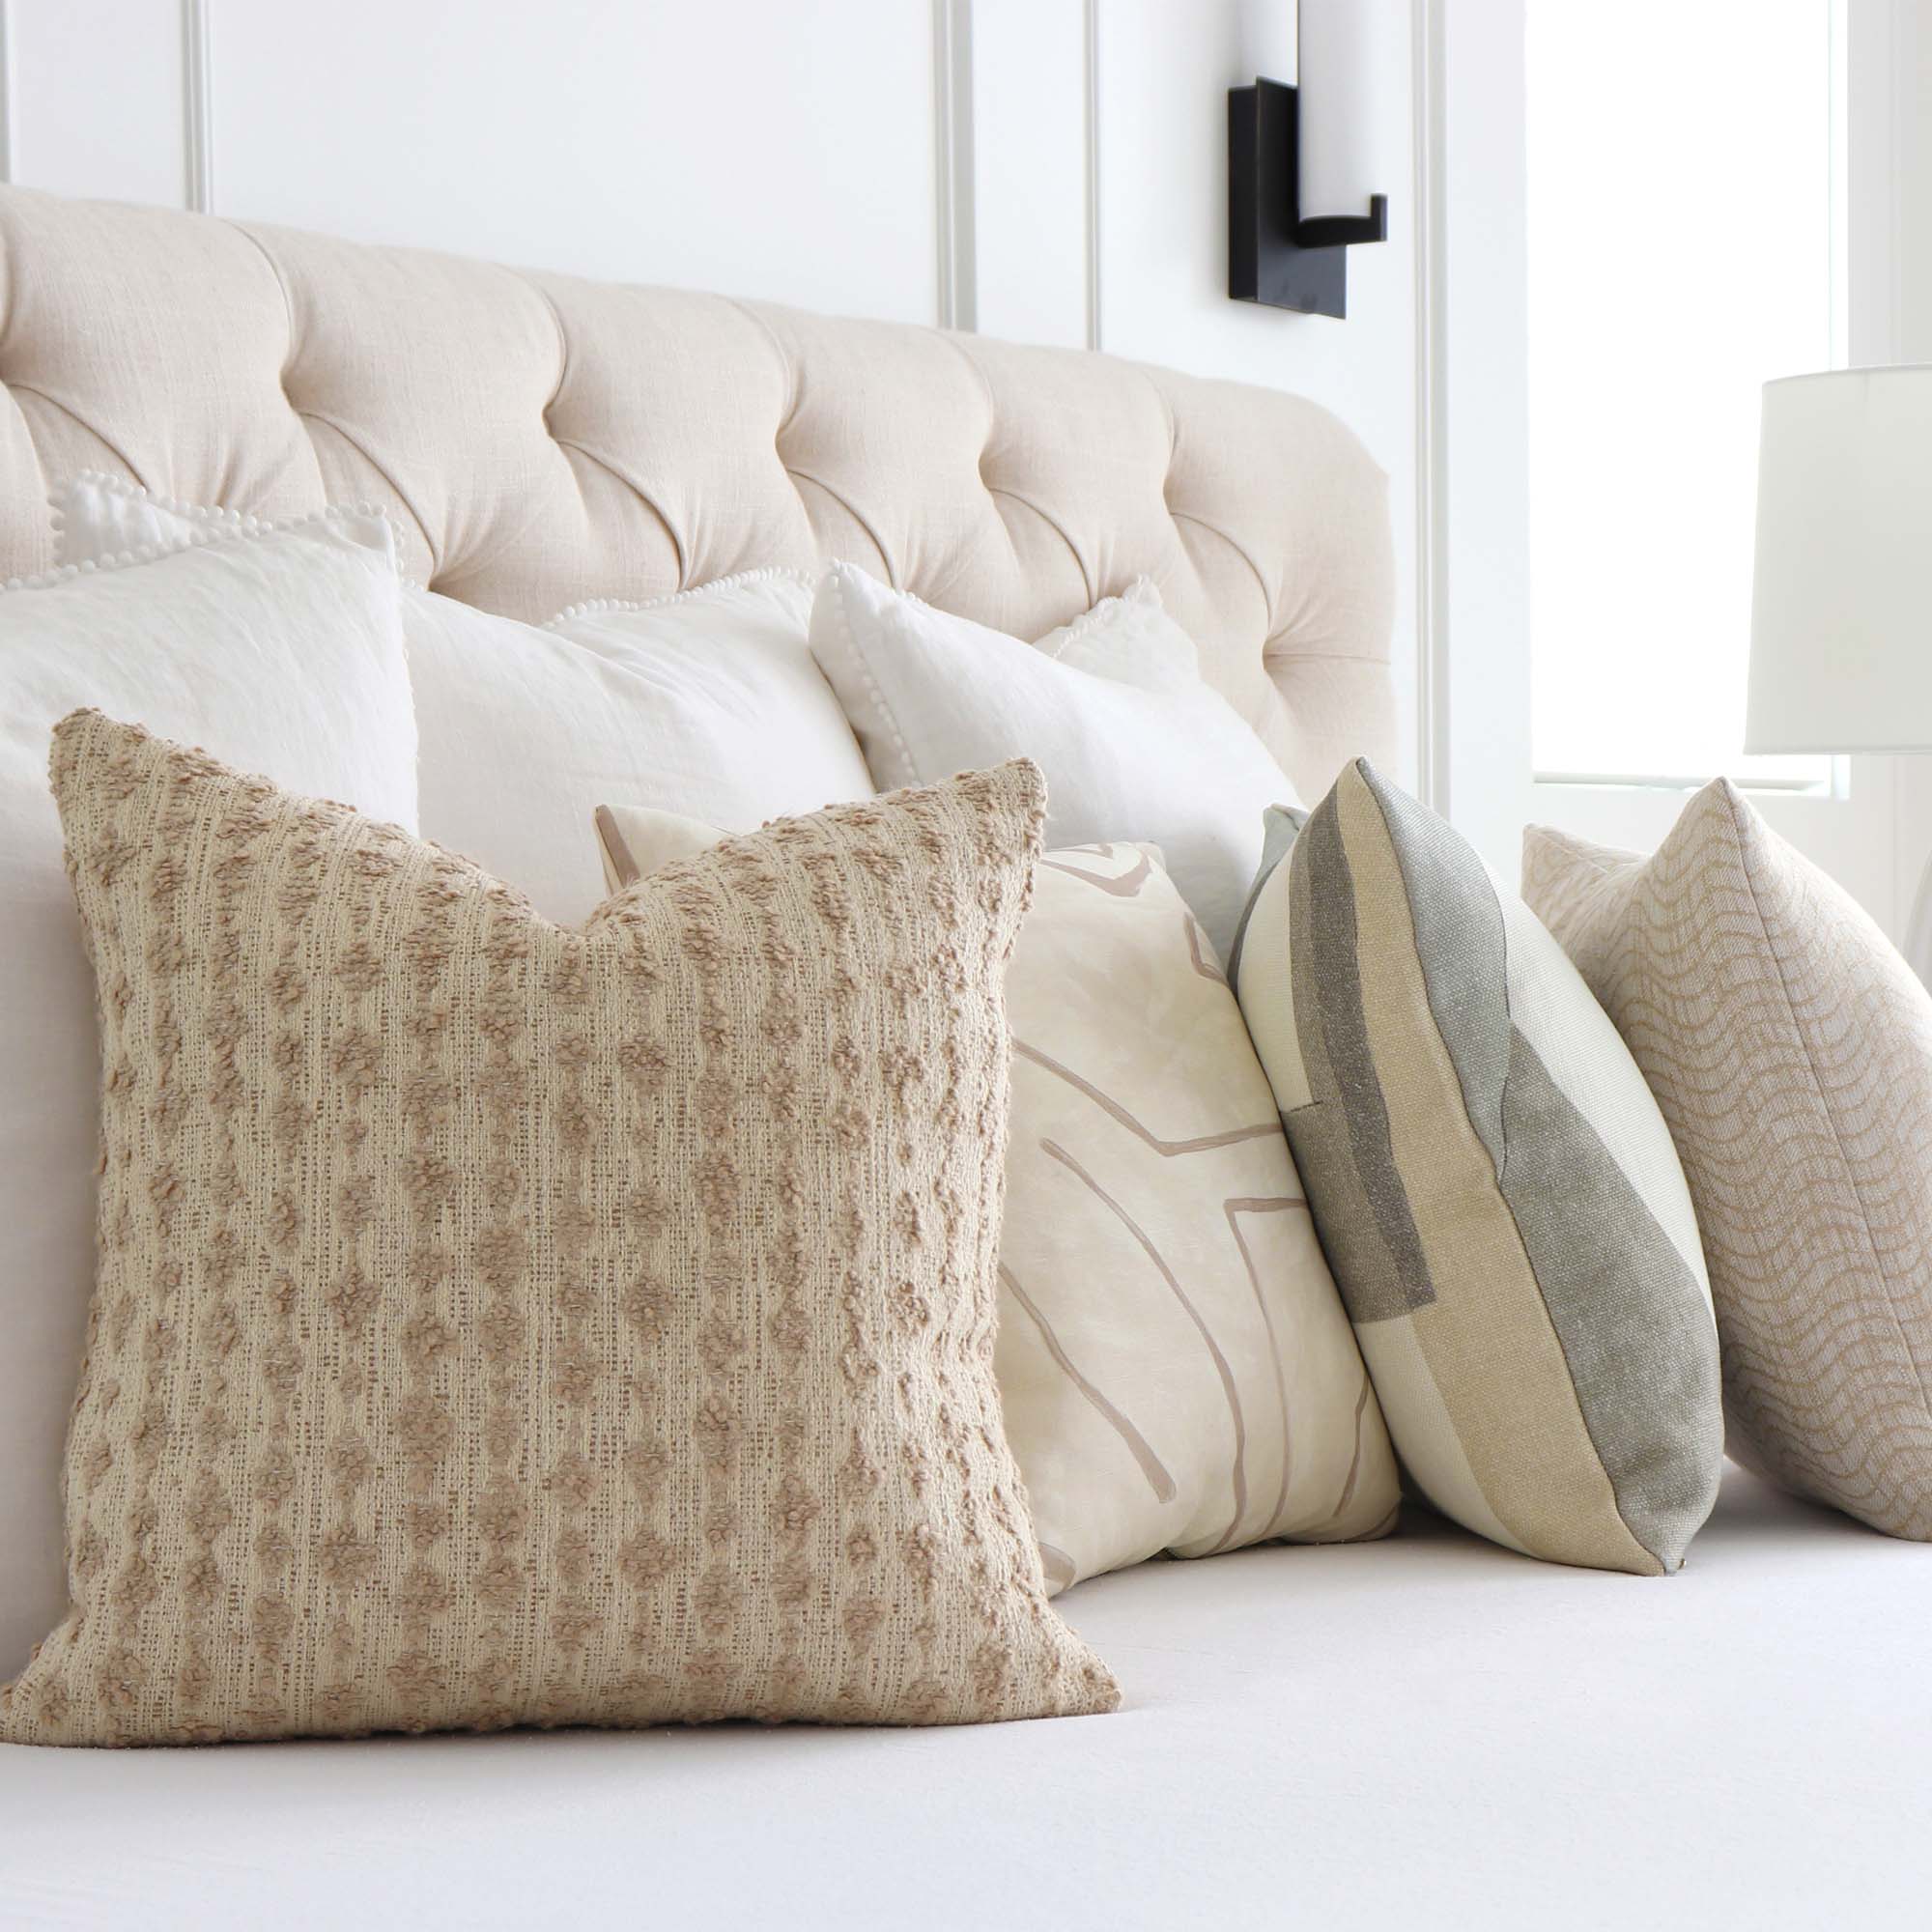 Kelly Wearstler LeeJofa Alabaster Stripe Bouclé Designer Throw Pillow Cover with Coordinating Throw Pillows